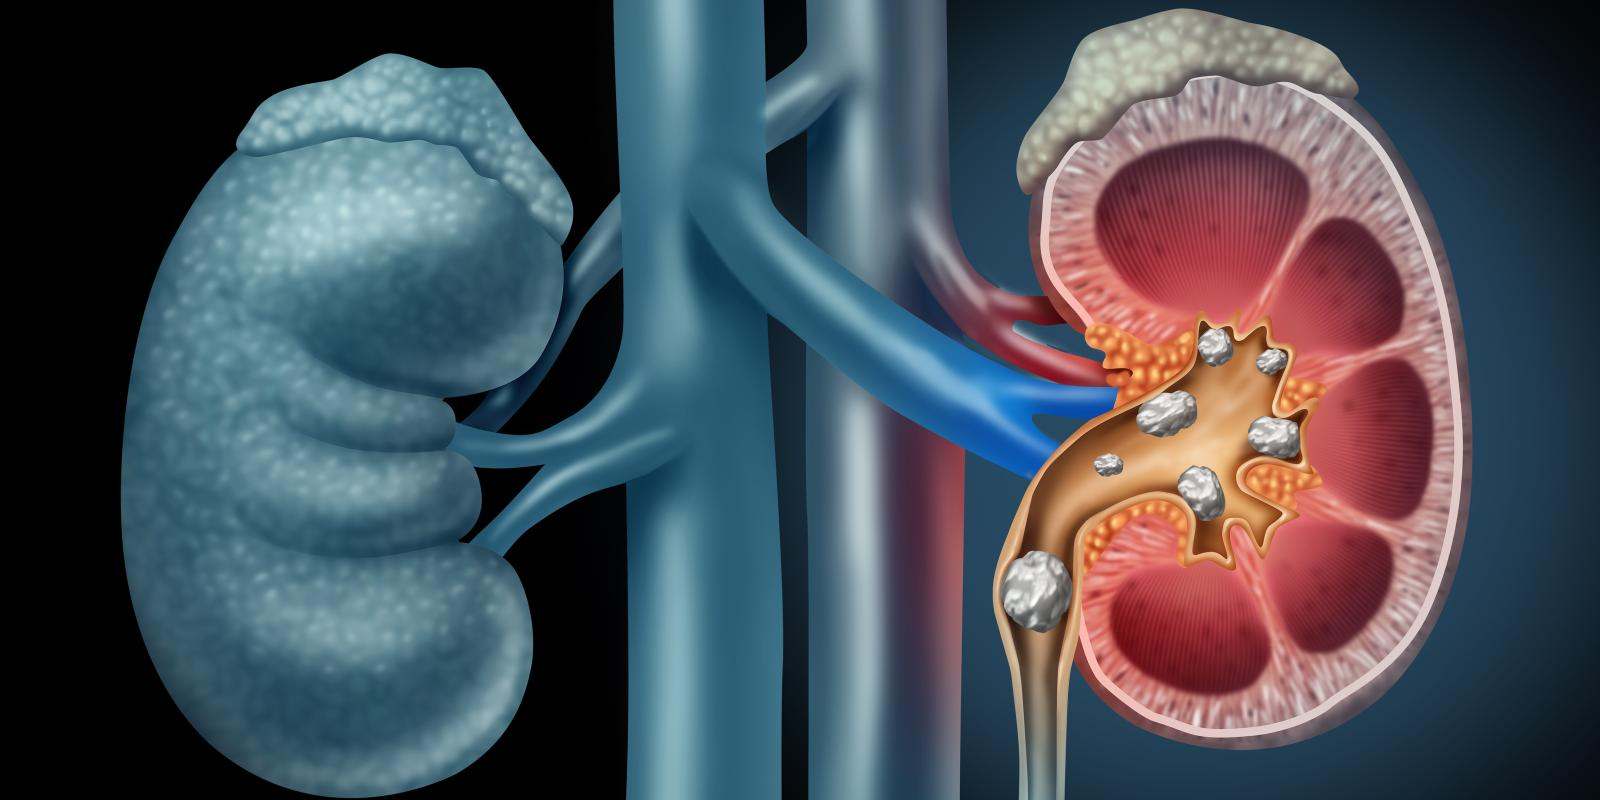 Illustration of kidney stones